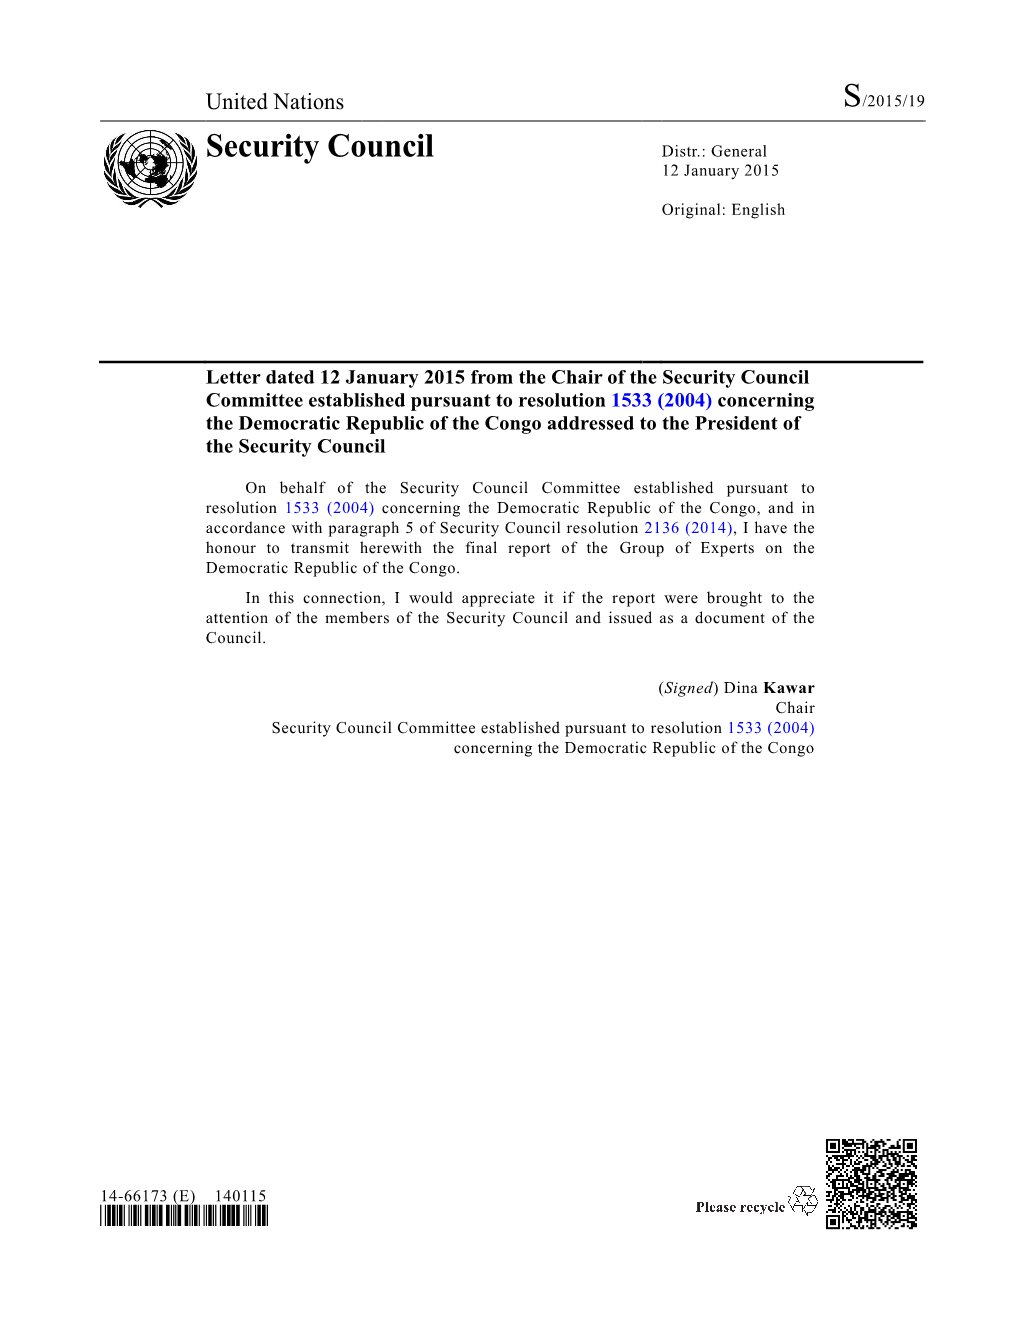 S/2015/19 Security Council